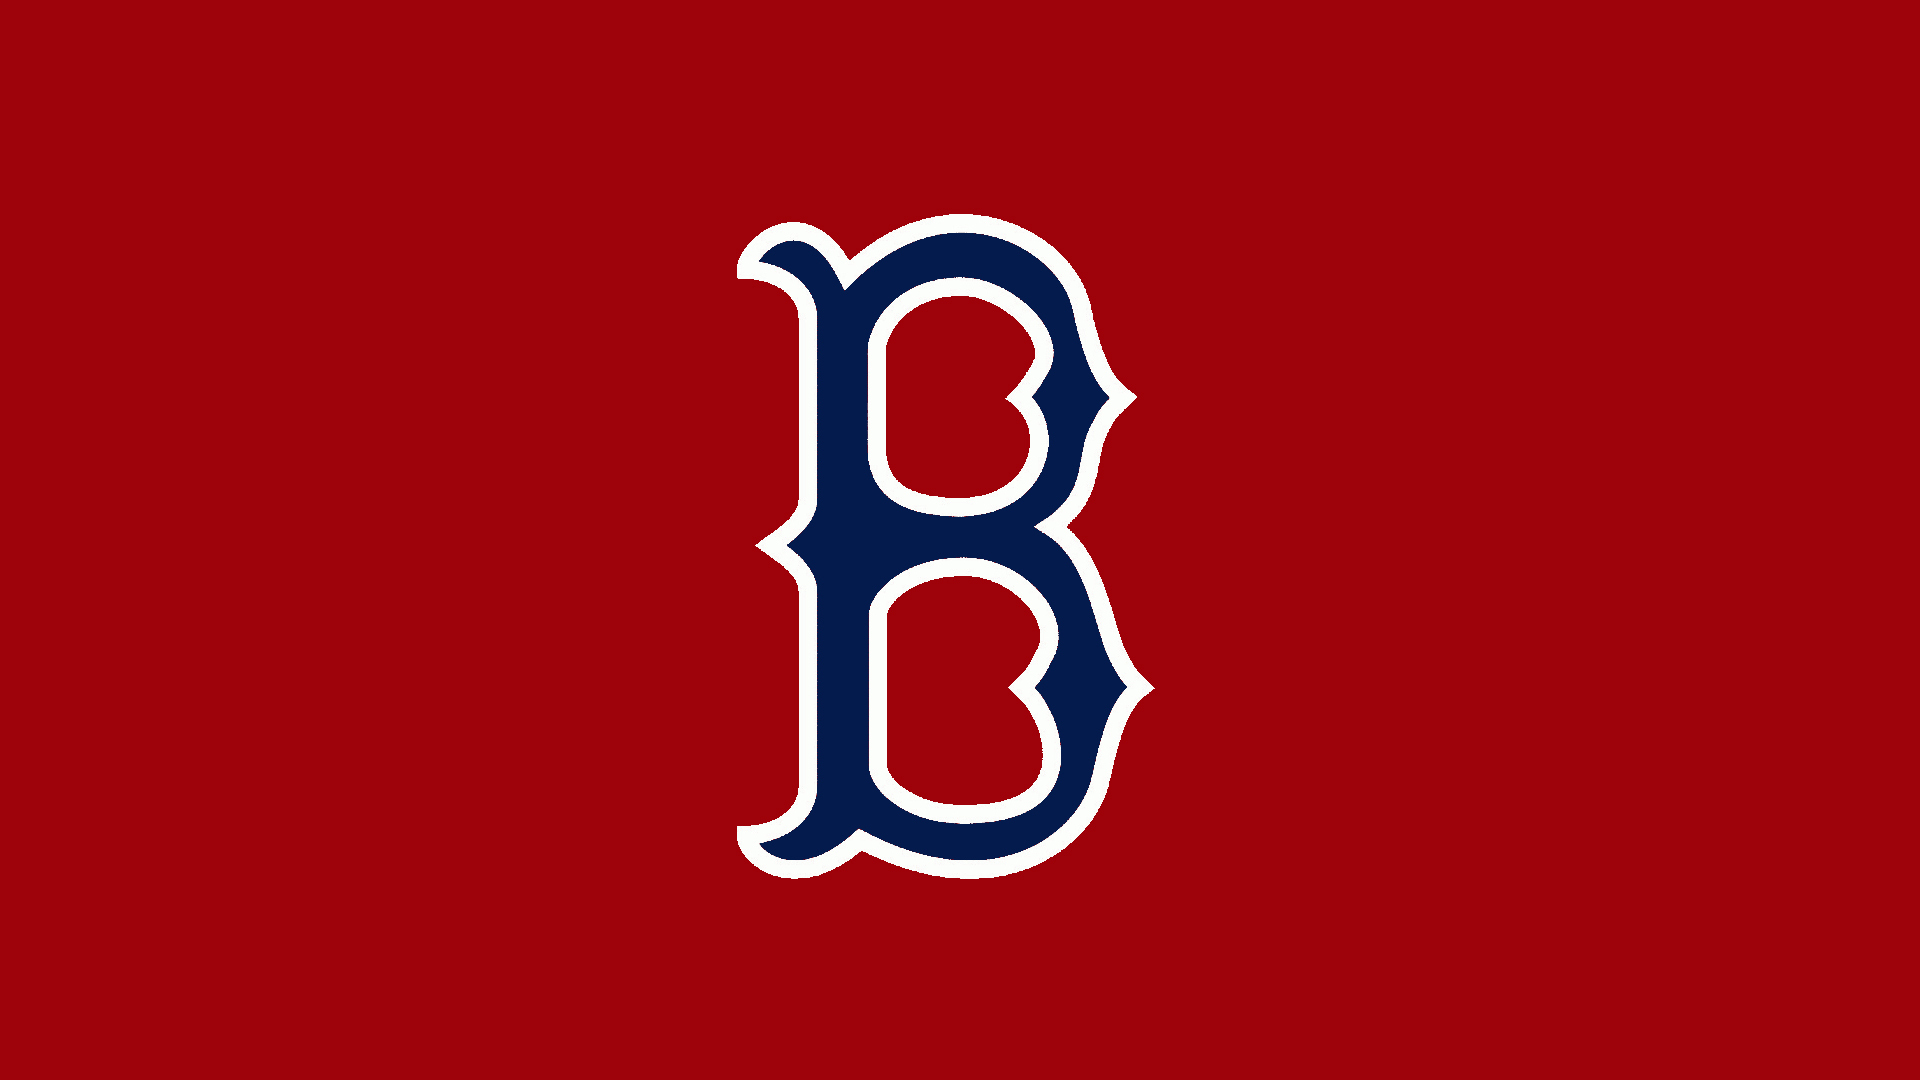 Red Sox Wallpaper 1920x1080 - Boston Red Sox Wallpaper (8502658 